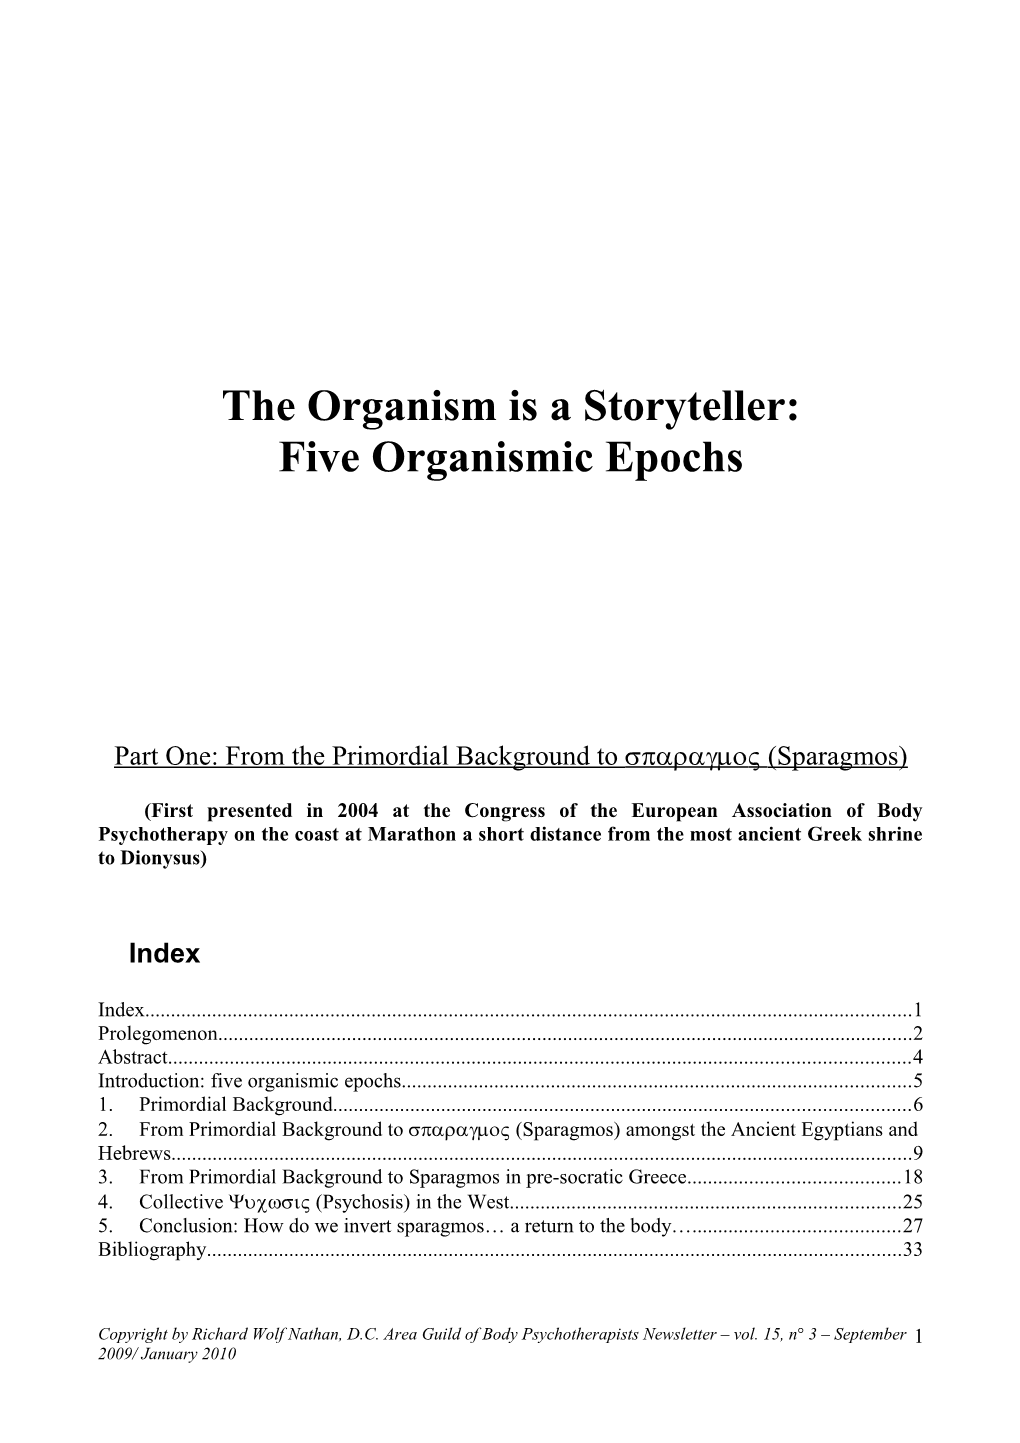 The Organism Is a Storyteller